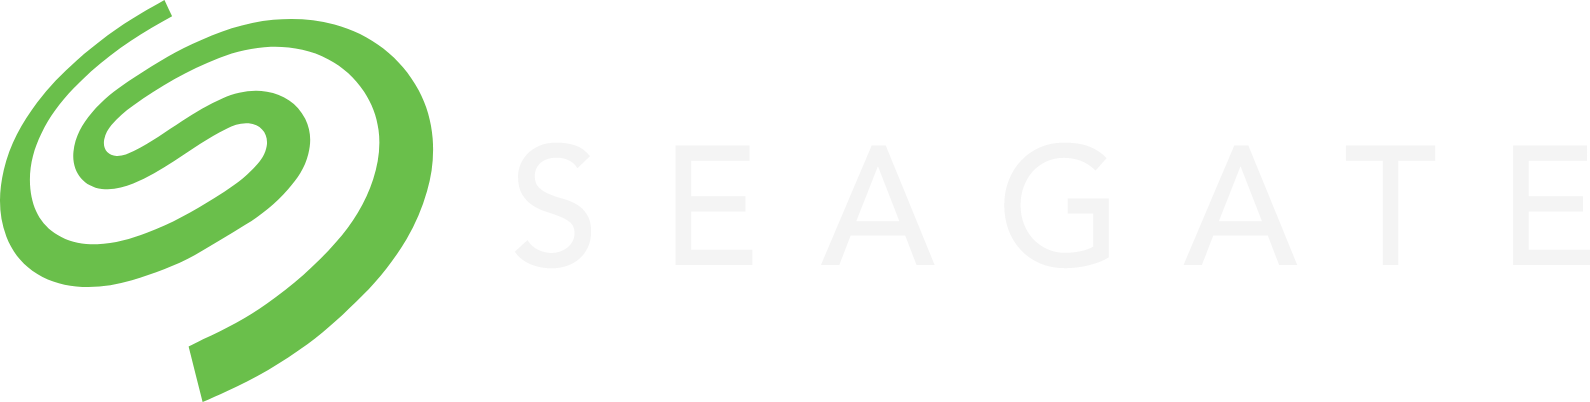 Seagate Technology logo large for dark backgrounds (transparent PNG)